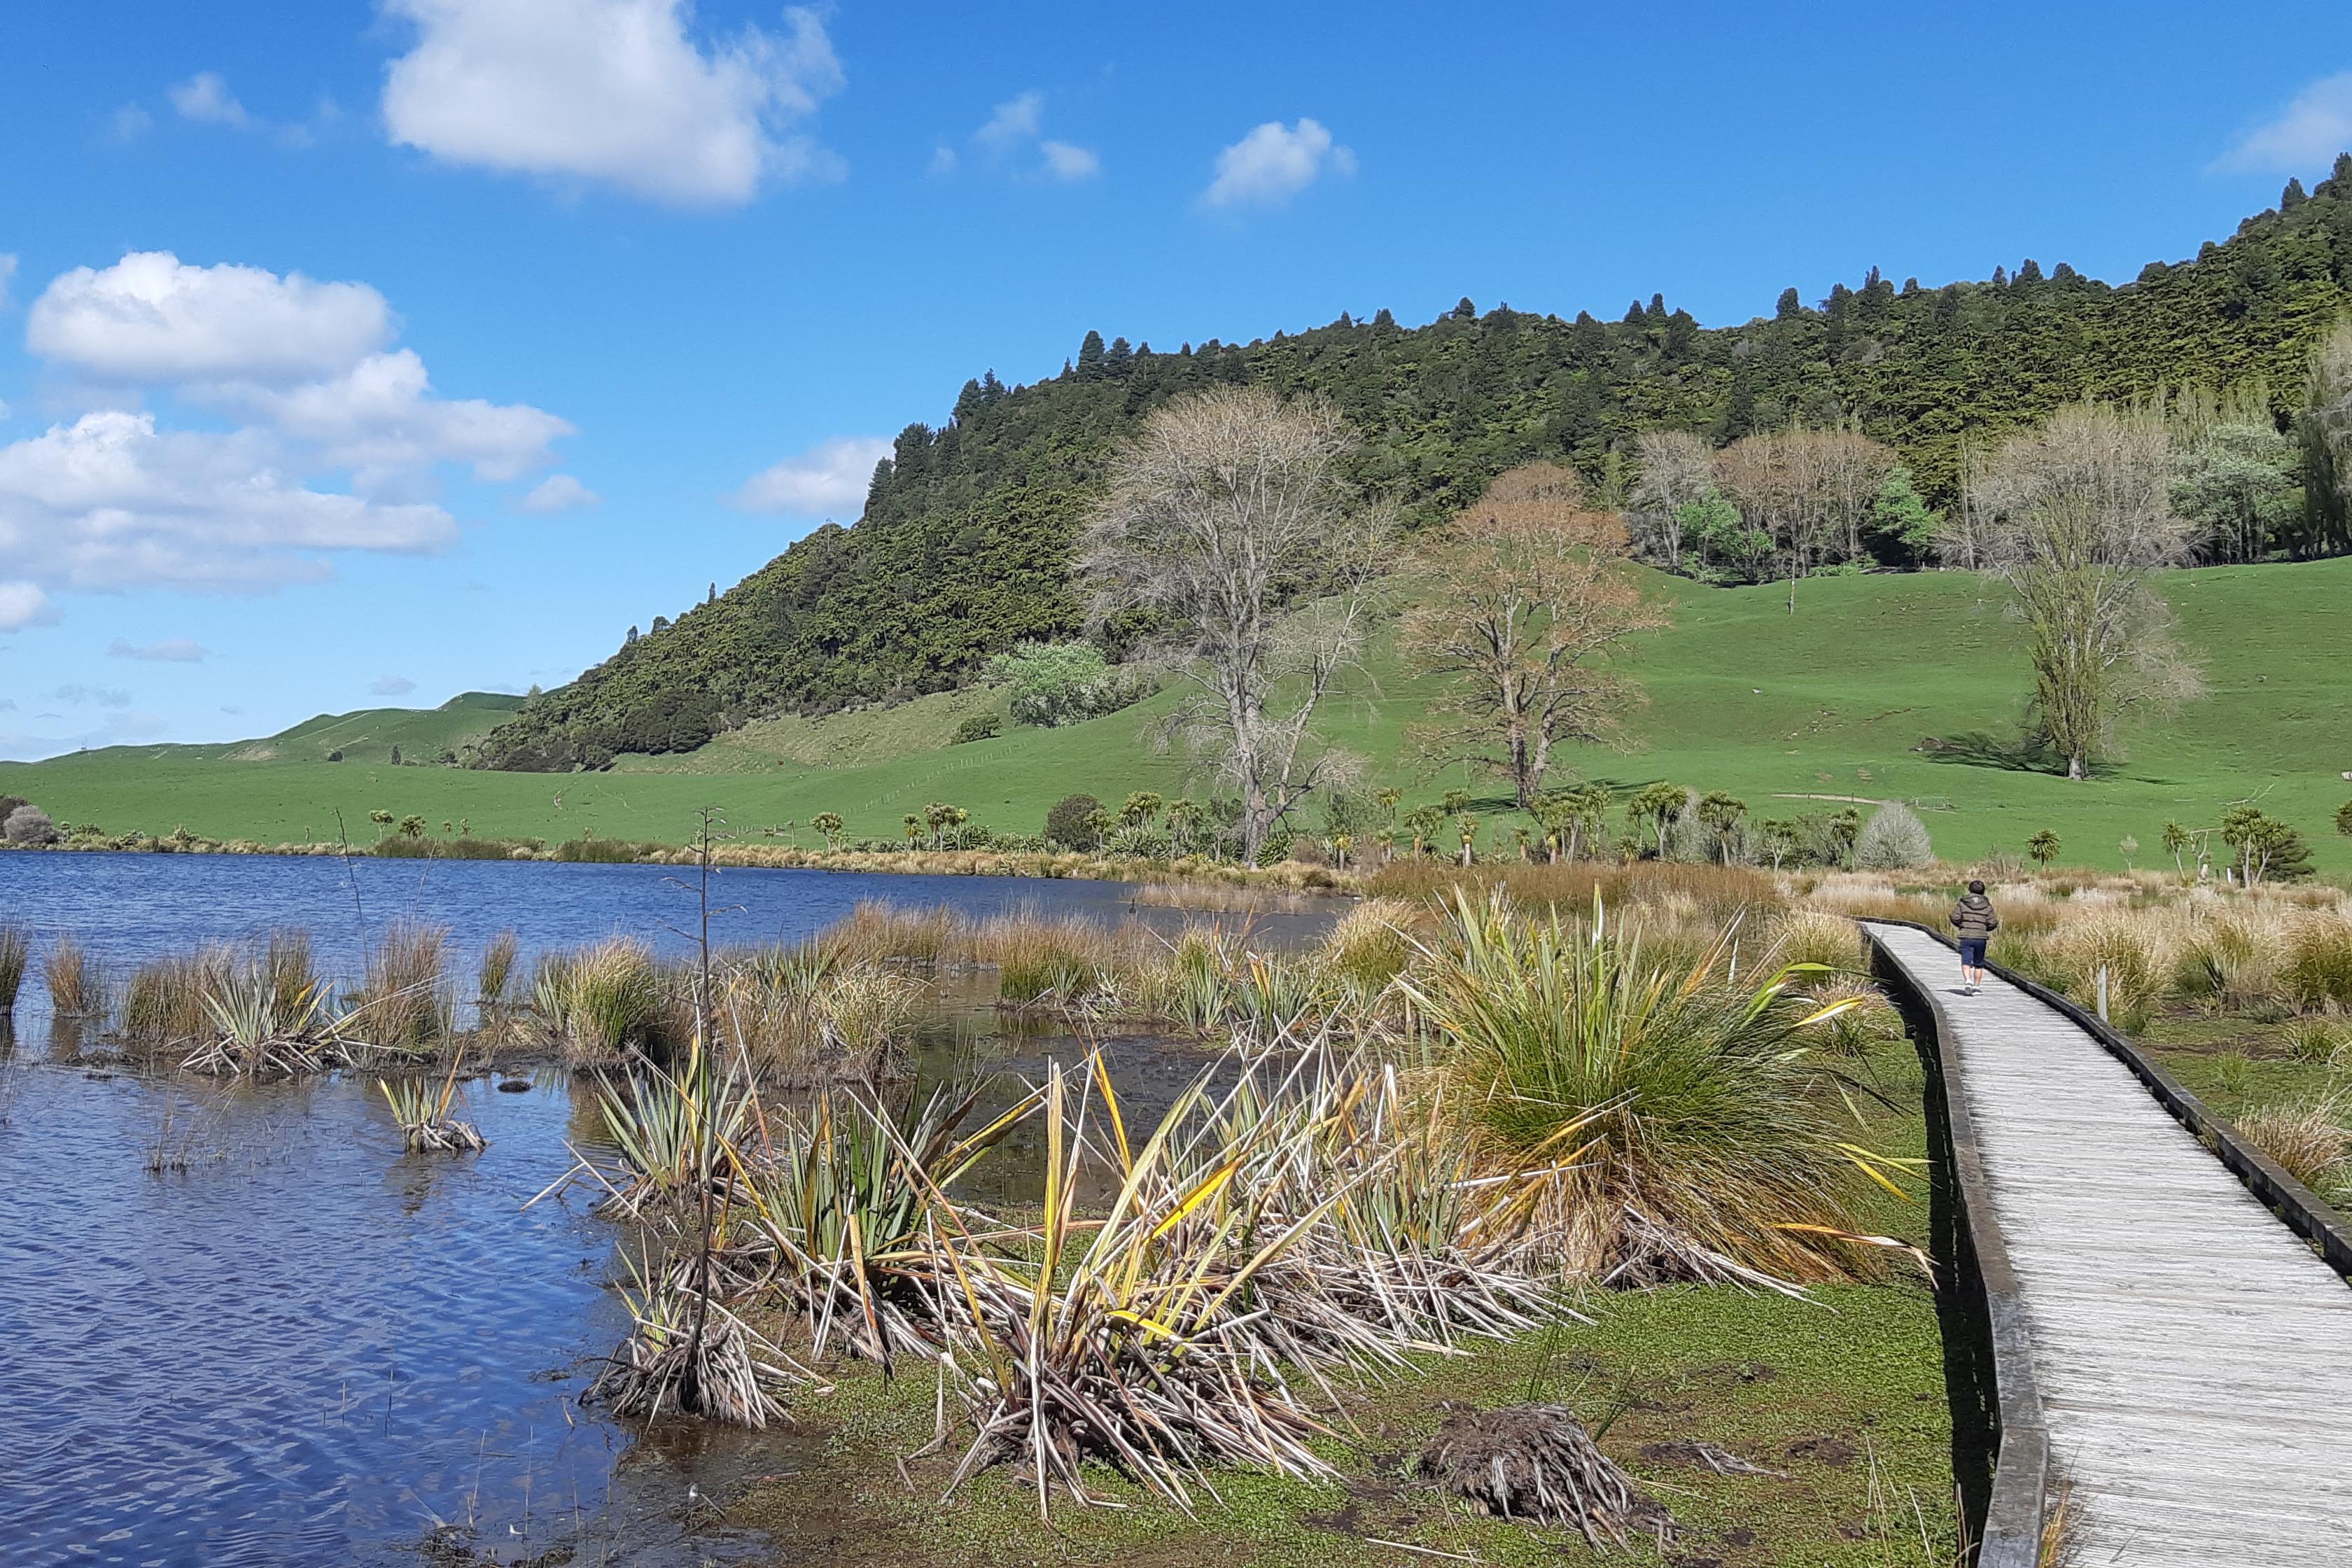 How to enjoy the long weekend in Rotorua